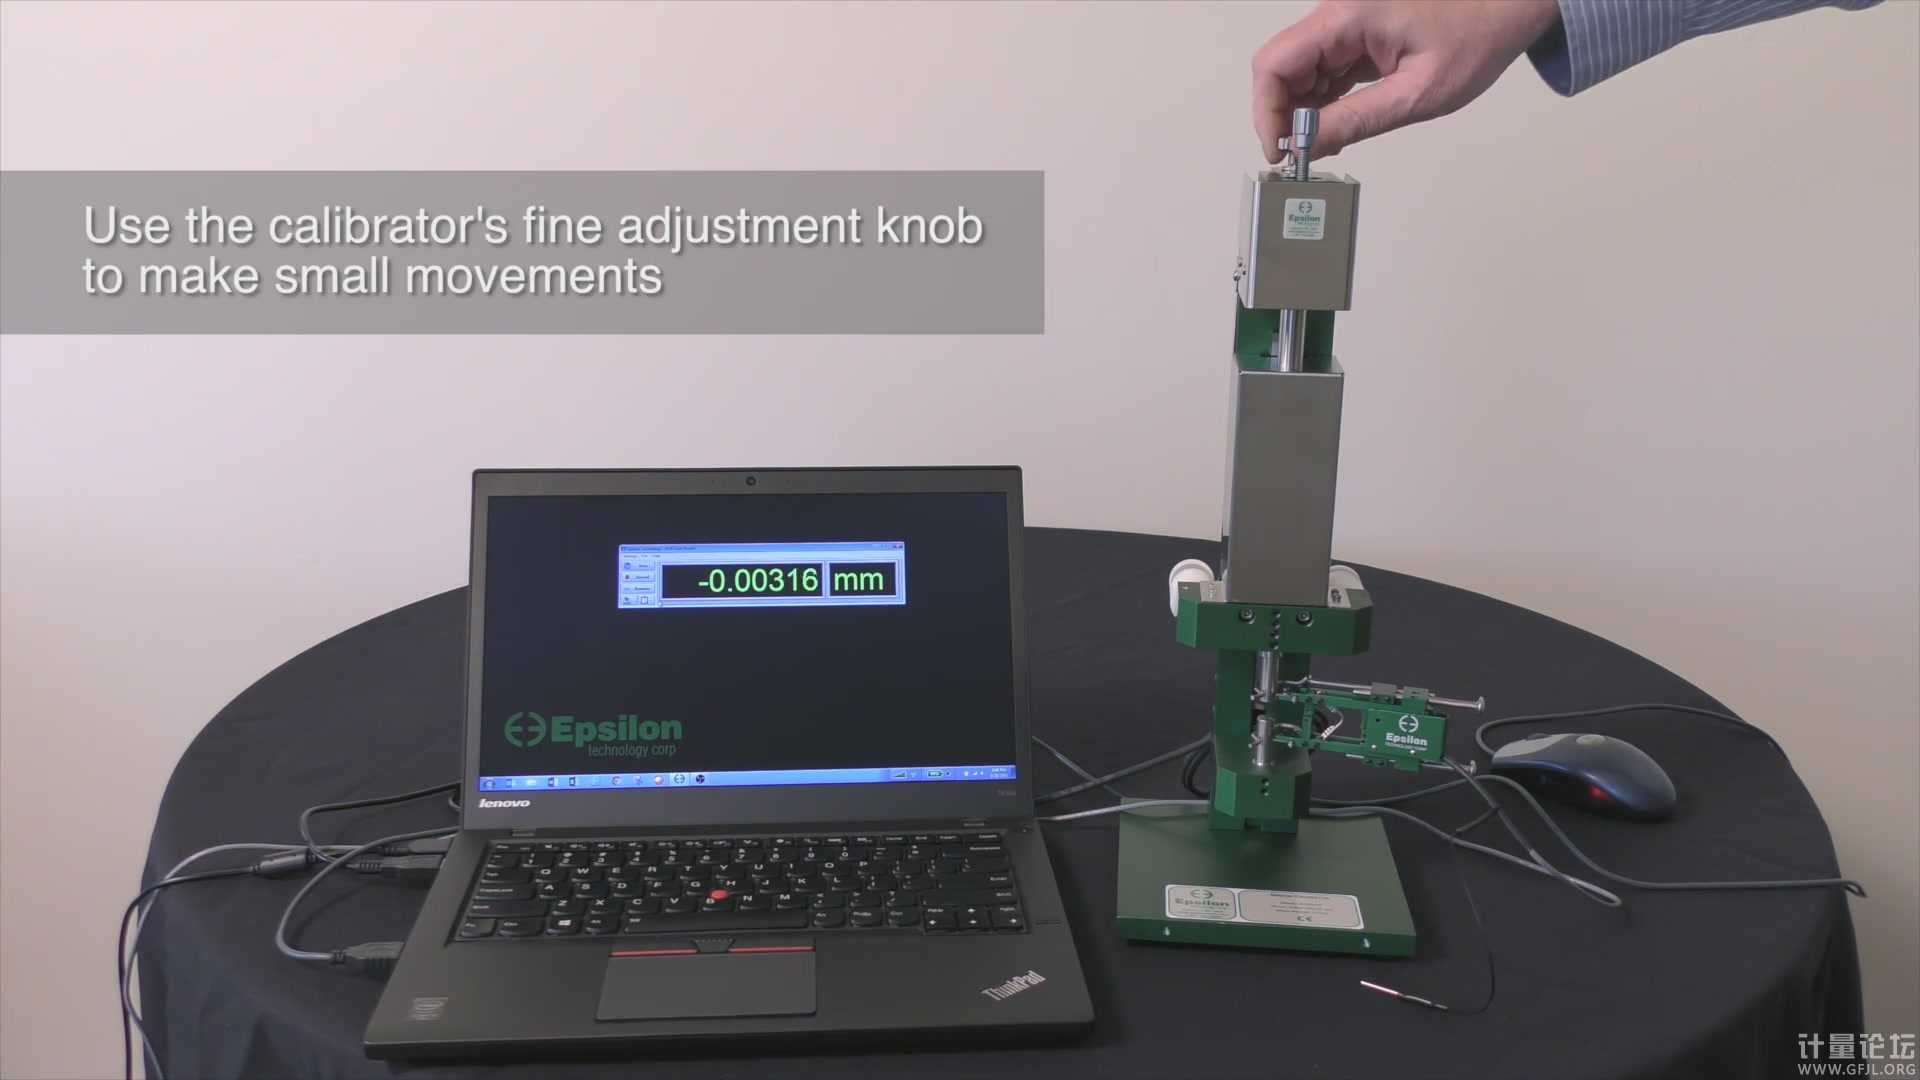 Digital extensometer calibrator with software position readout (Epsilon Technolo.jpg